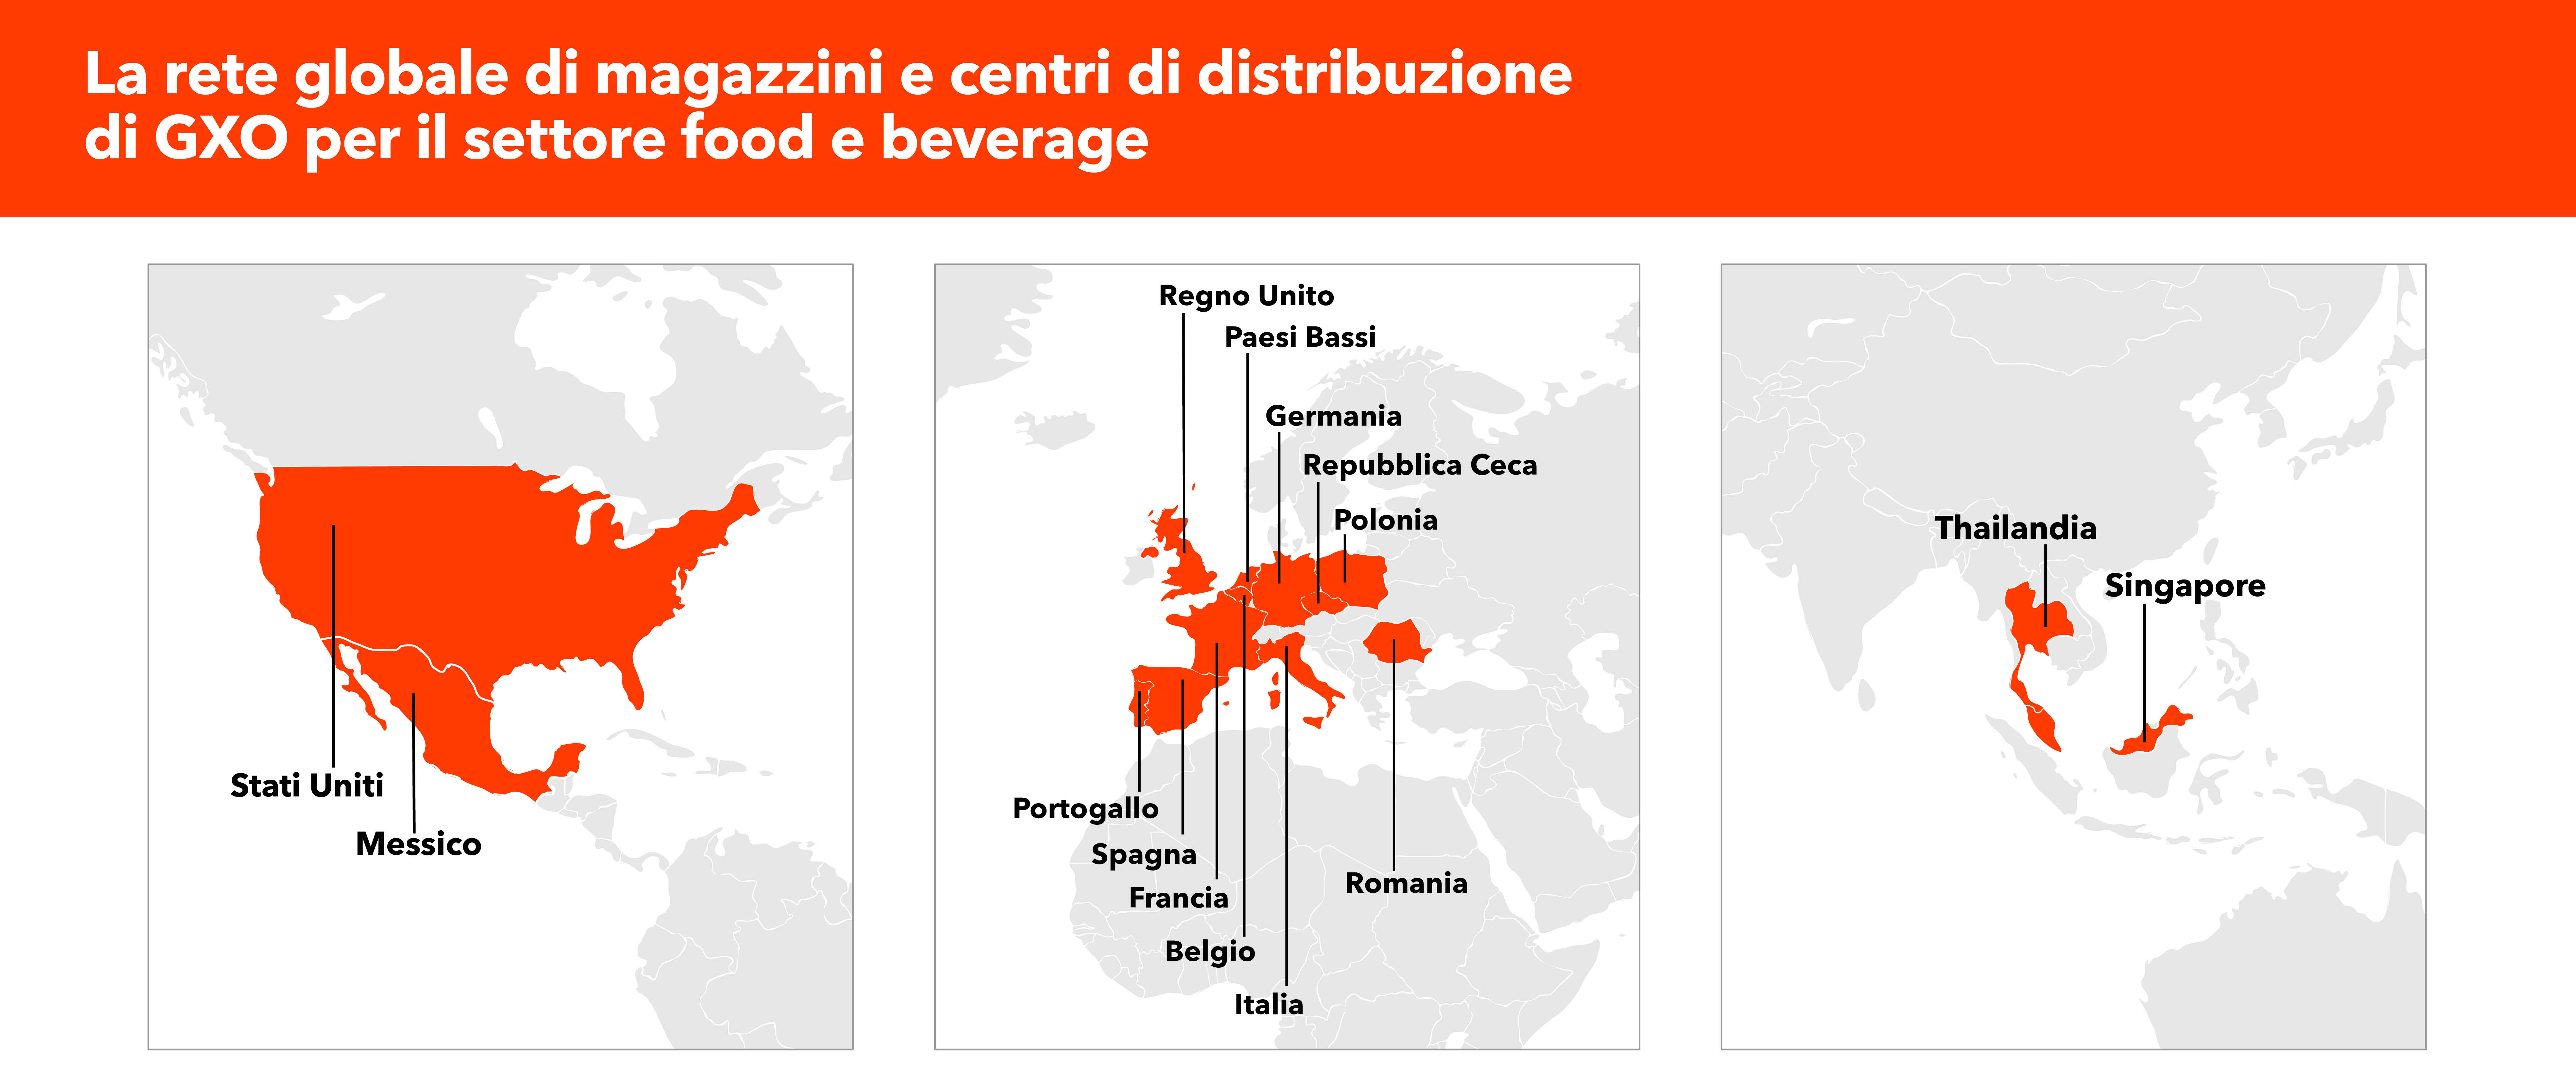 GXO's global food & beverage network